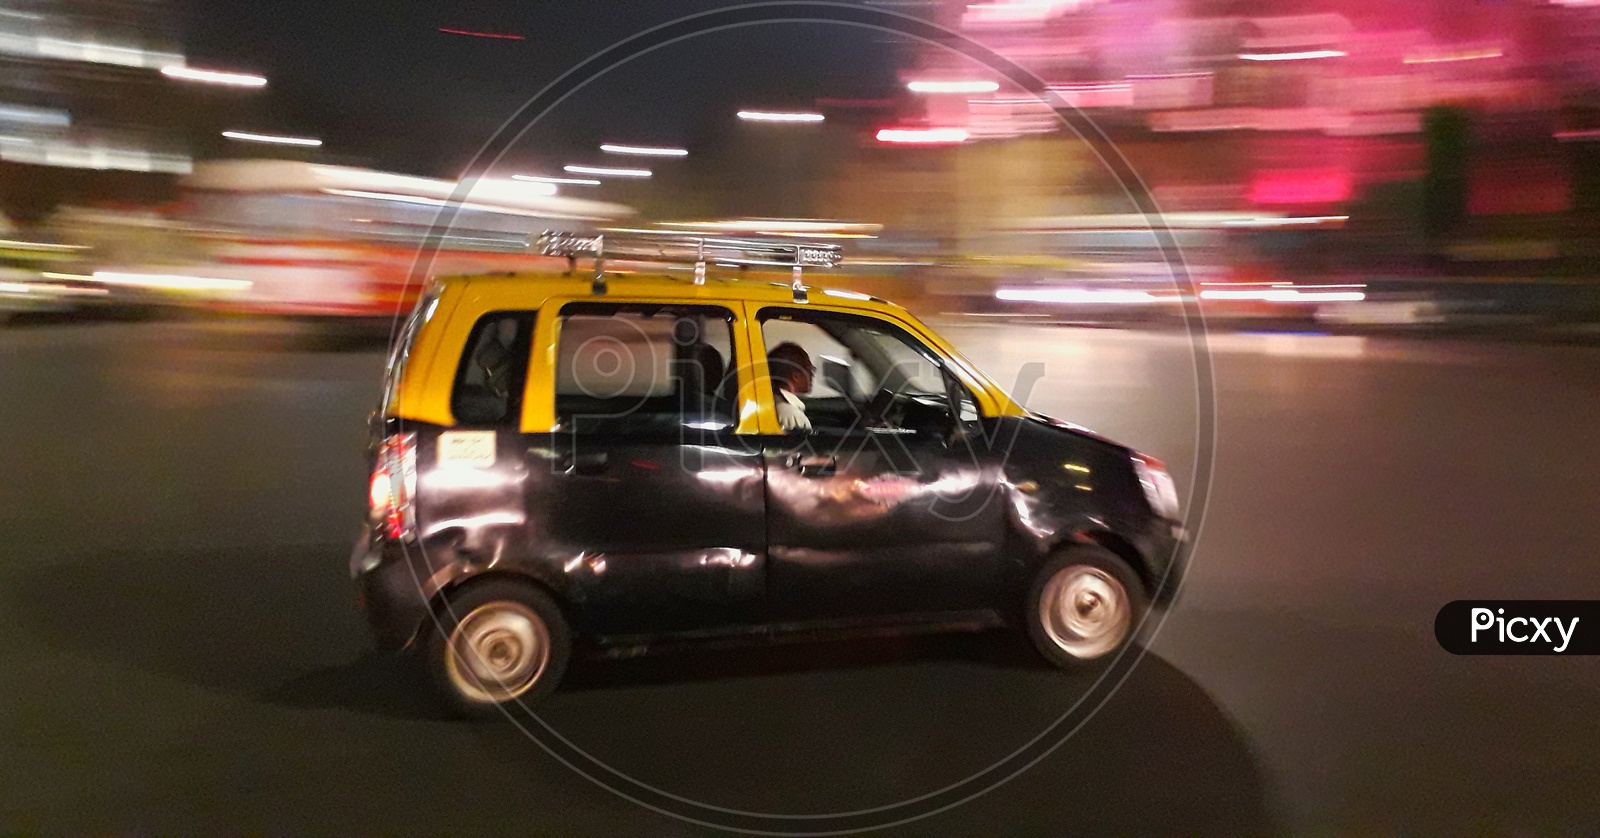 Mumbai's kali peeli taxi showing mumbai's fast life